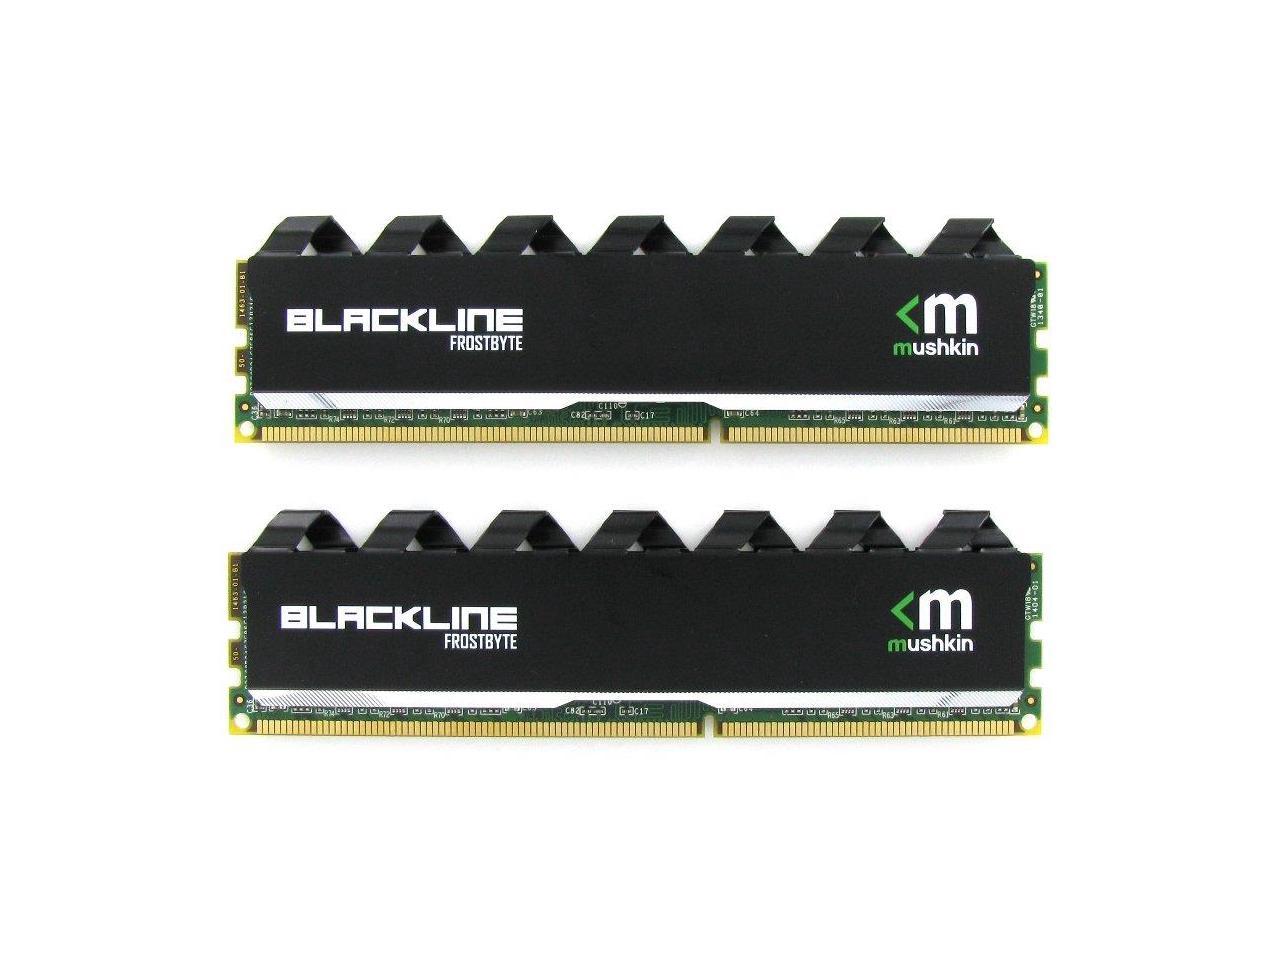 Mushkin Blackline FROSTBYTE-G3-B DDR4-2400 8G(2X4GB) PC4-19200 CL15 288PIN Kit